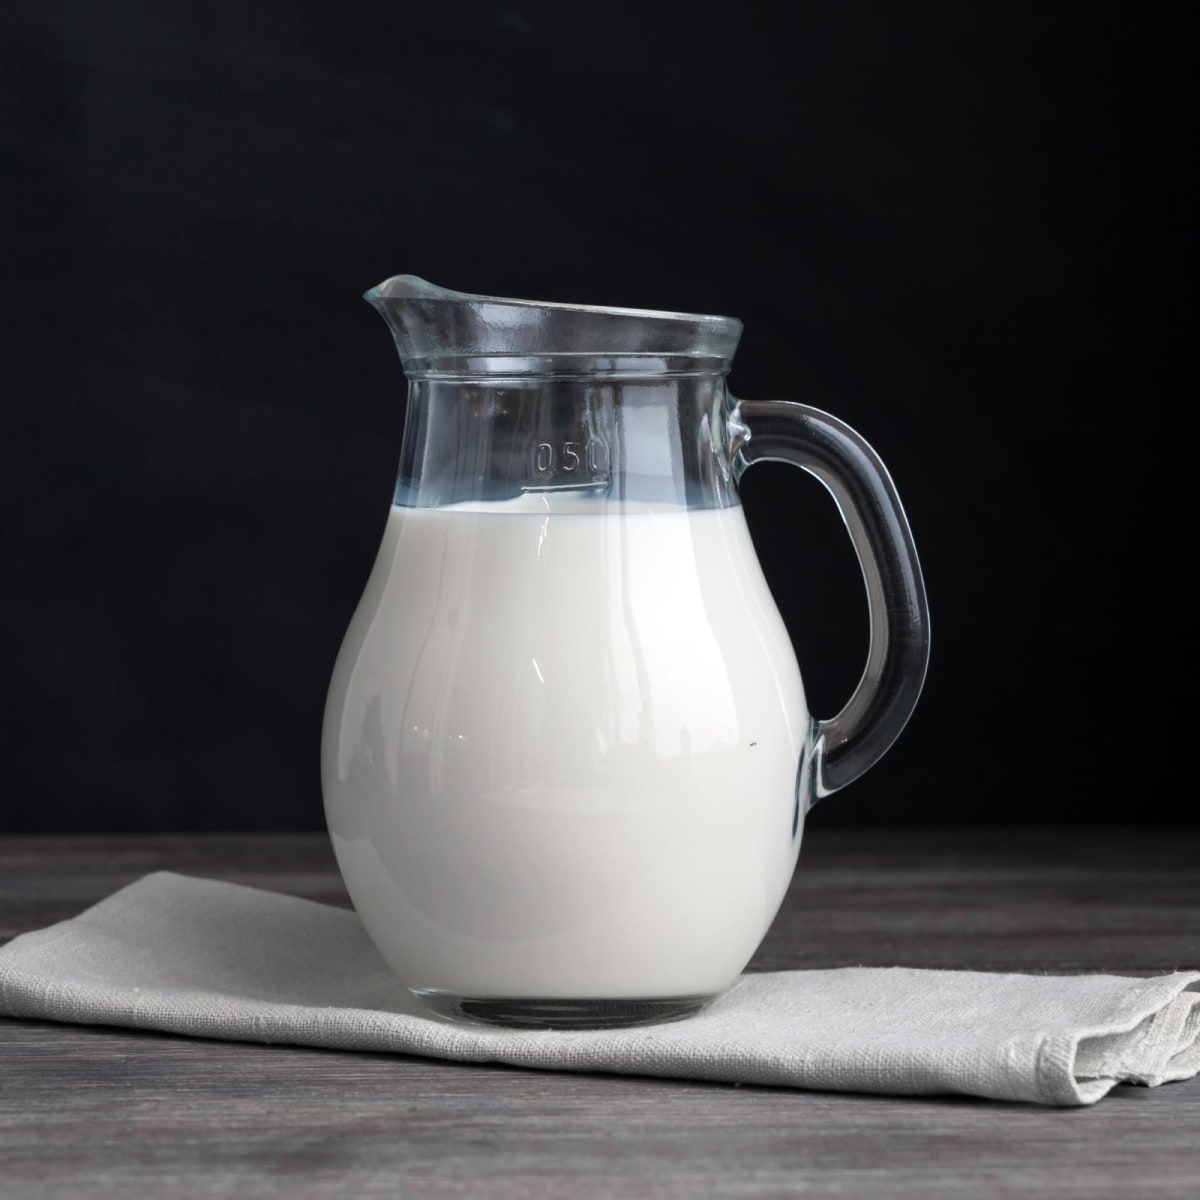 Fortified Milk > Nutrition > Yale Medicine